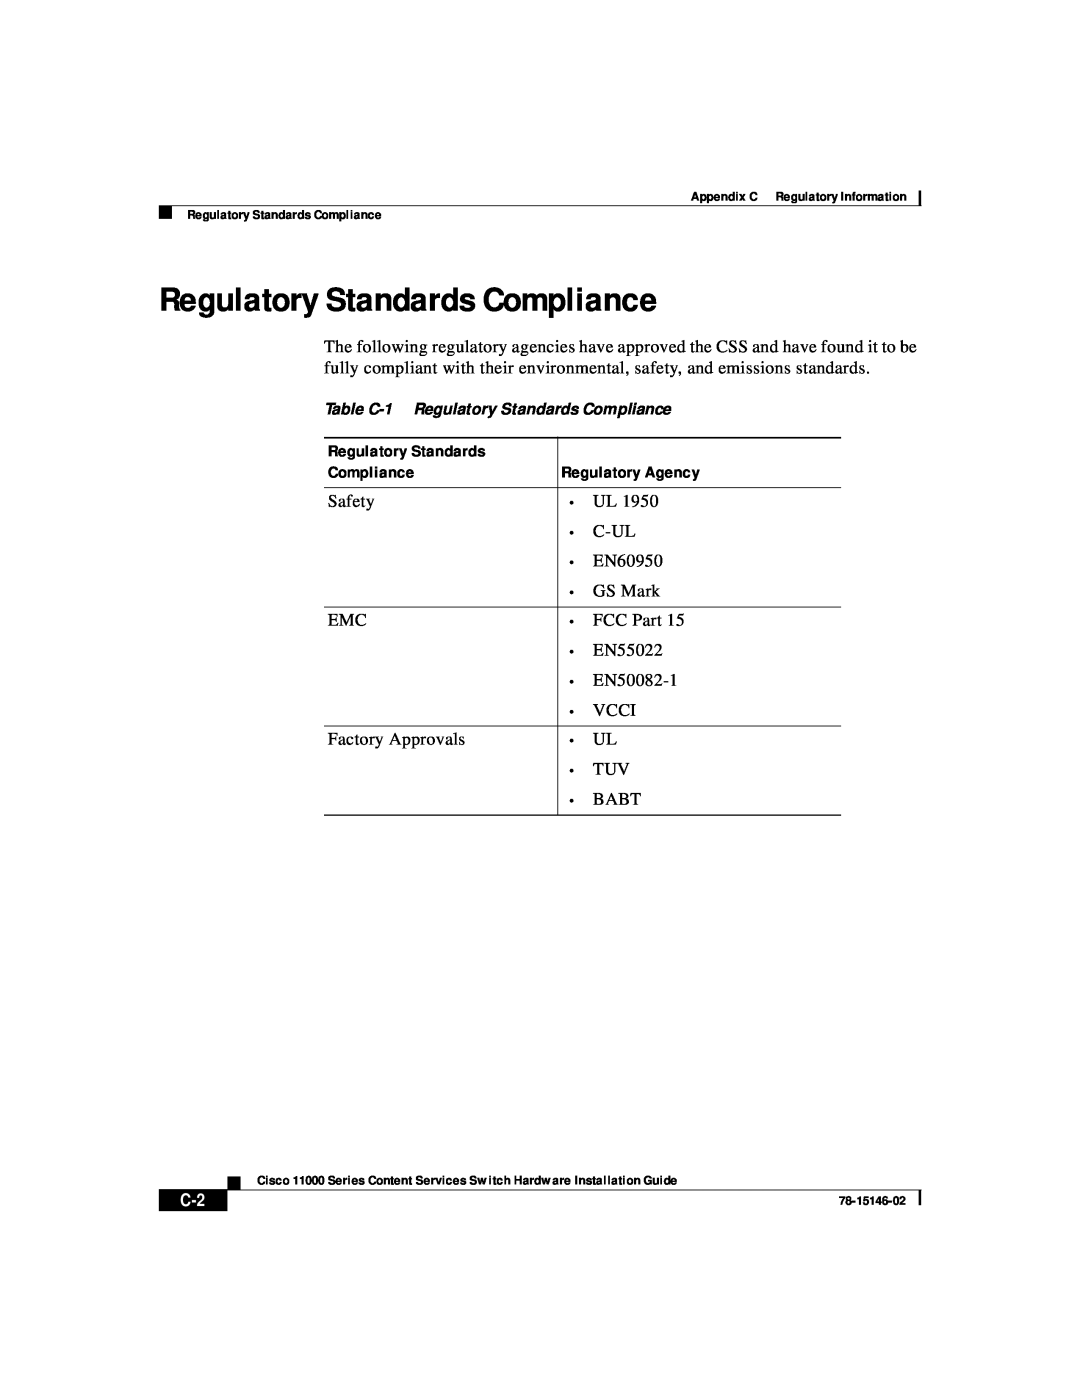 Cisco Systems 11000 Series manual Regulatory Standards Compliance 